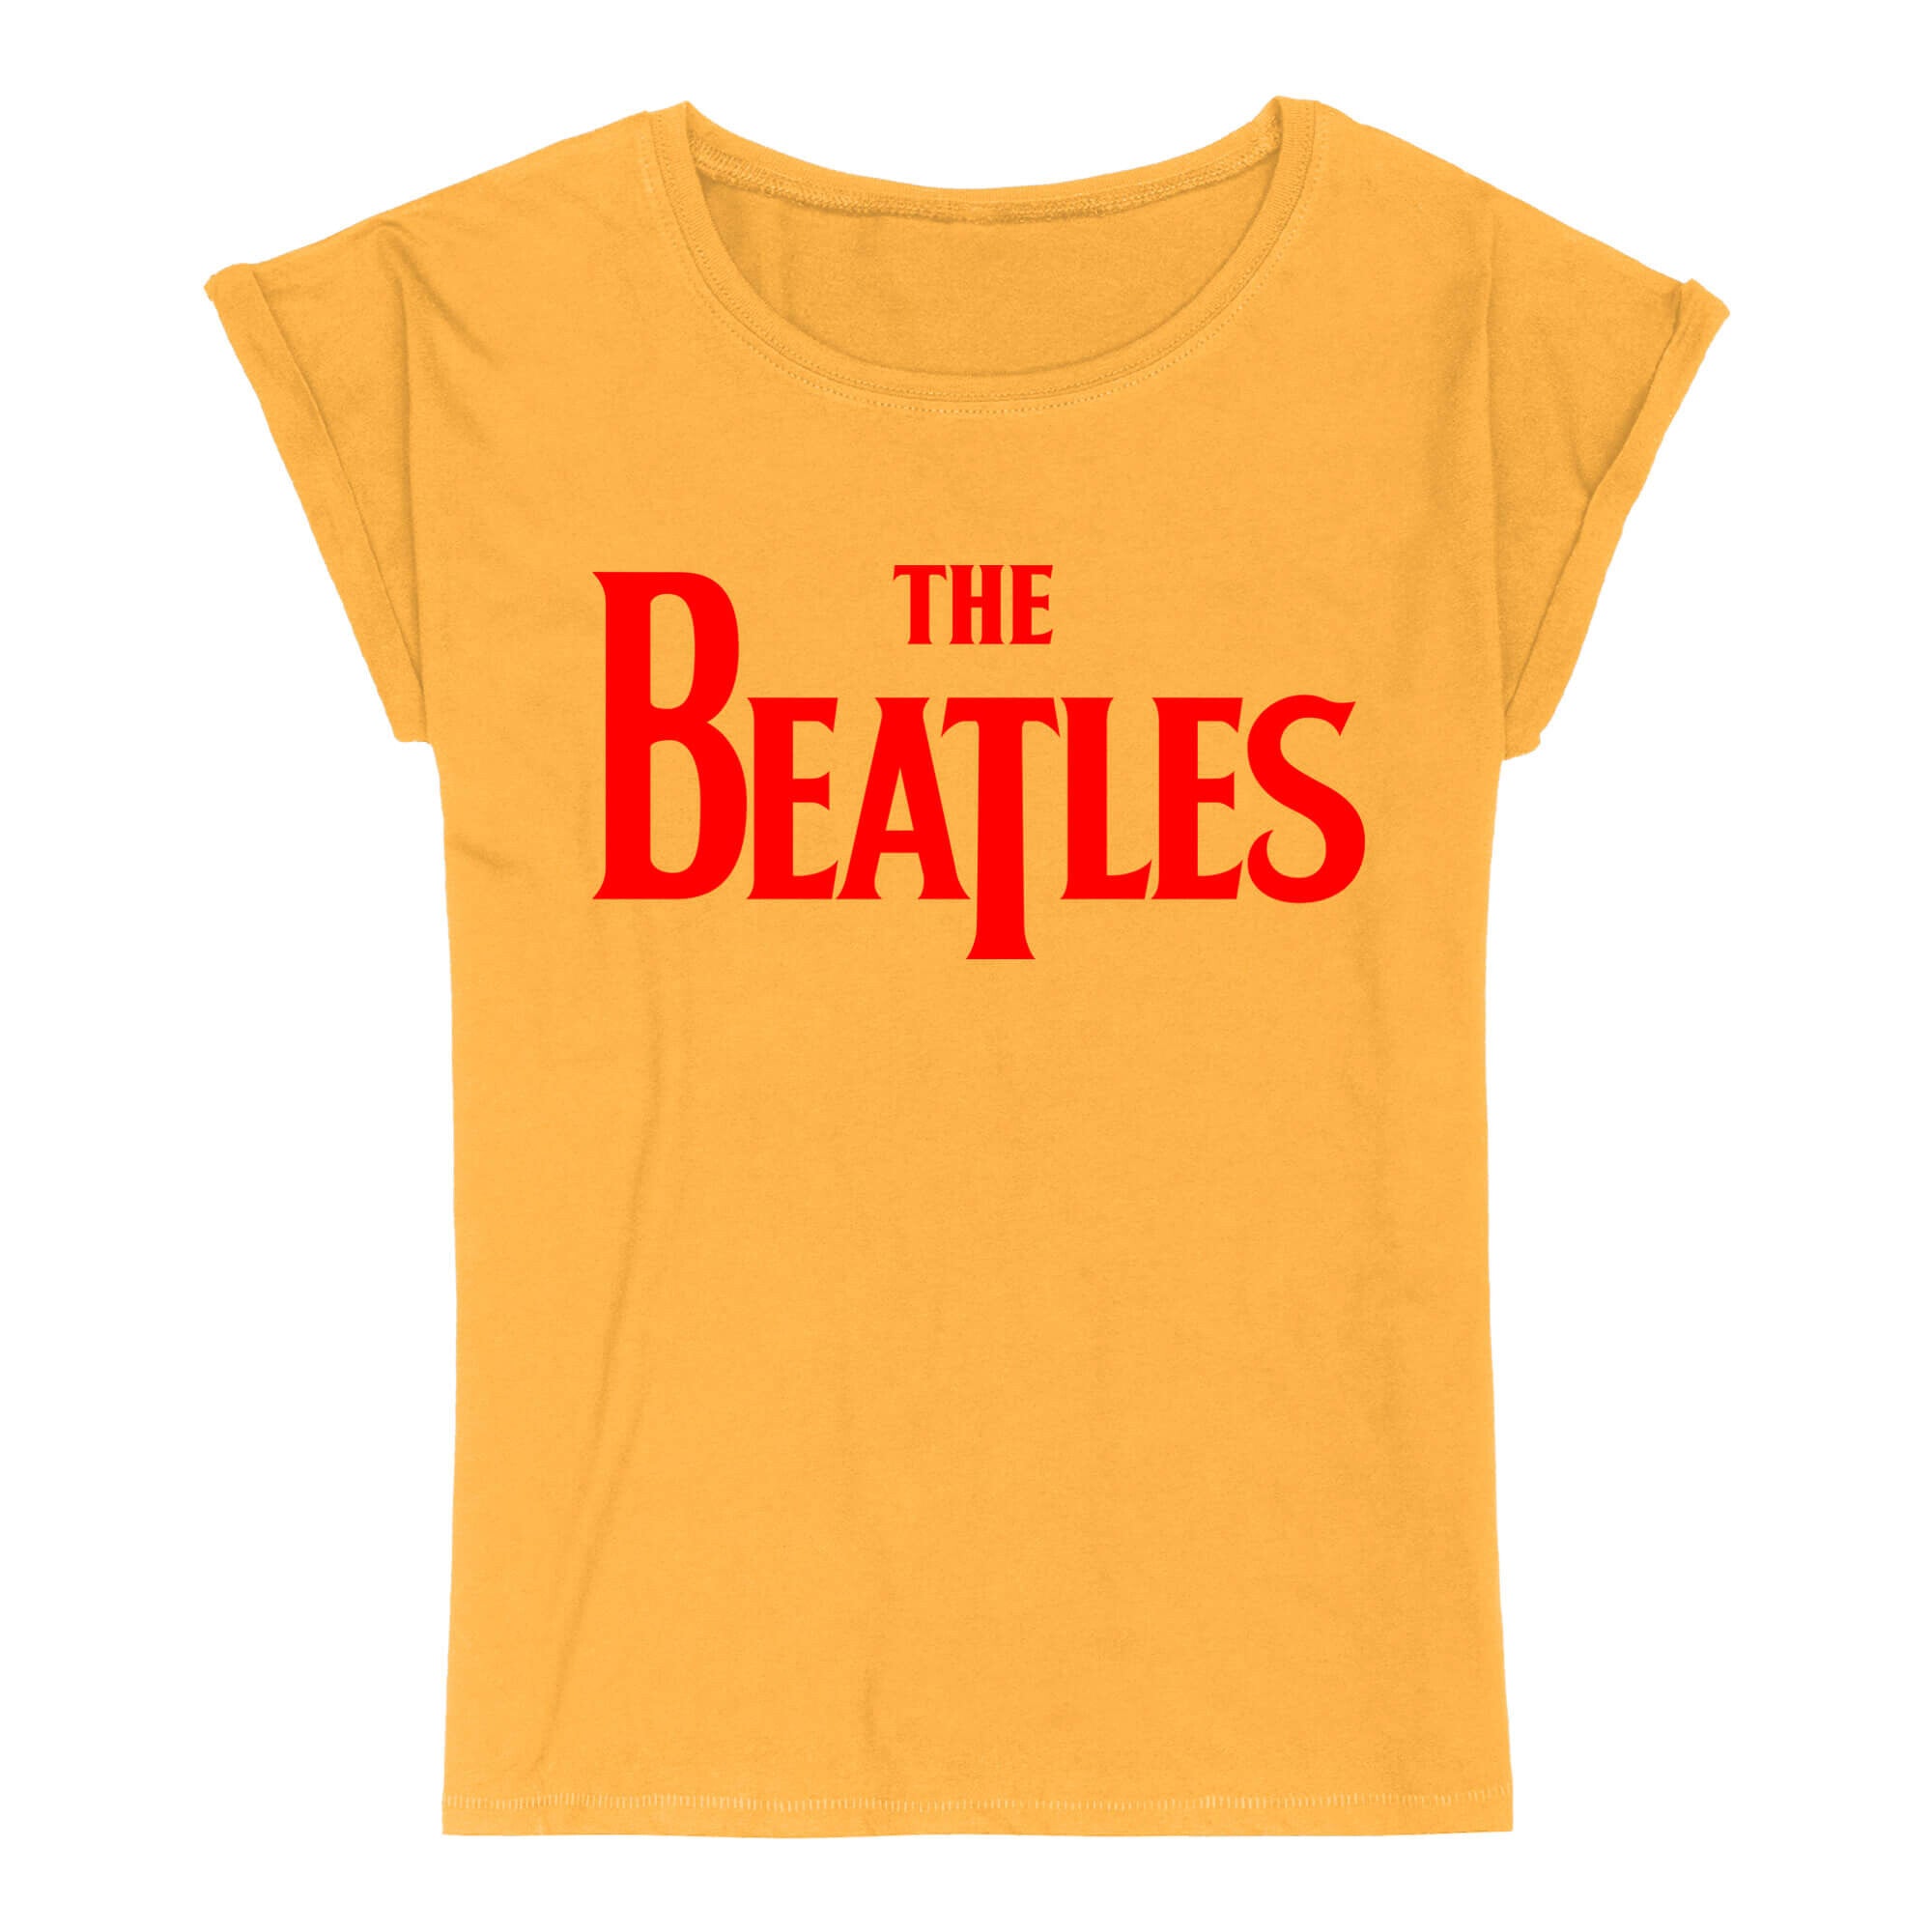 https://images.bravado.de/prod/product-assets/beatles-the/the-beatles-domestic/products/136933/web/247352/image-thumb__247352__3000x3000_original/The-Beatles-Logo-Girlie-Shirt-orange-136933-247352.7945a6df.jpg